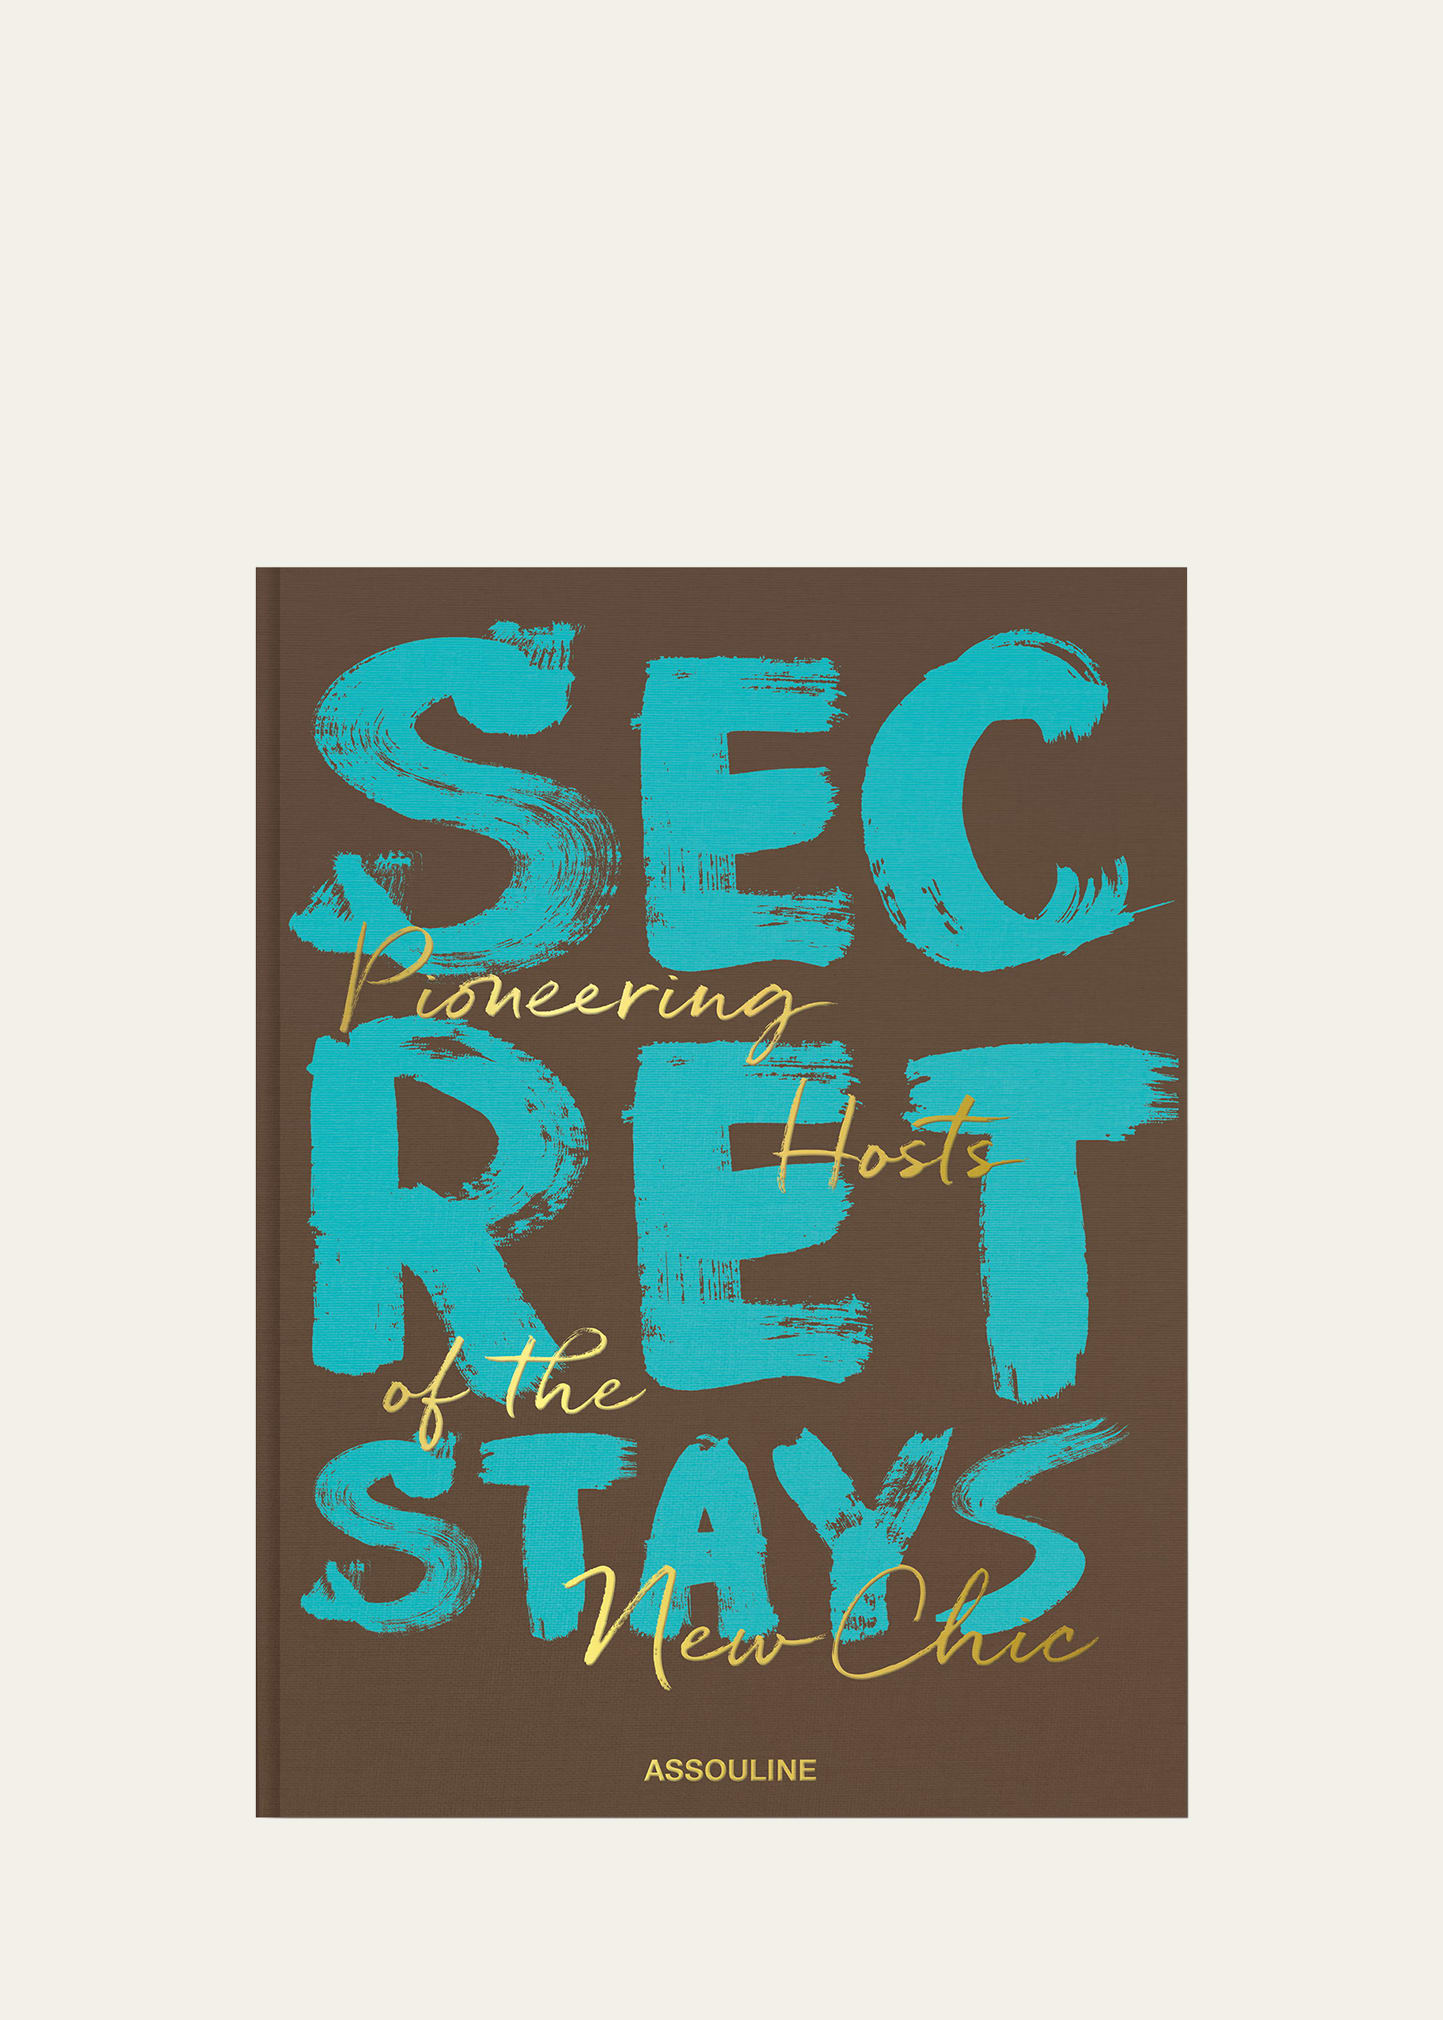 "Secret Stays: Pioneering Hosts of the New Chic" Book by Melinda Stevens, Issy von Simson, & Tabitha Joyce